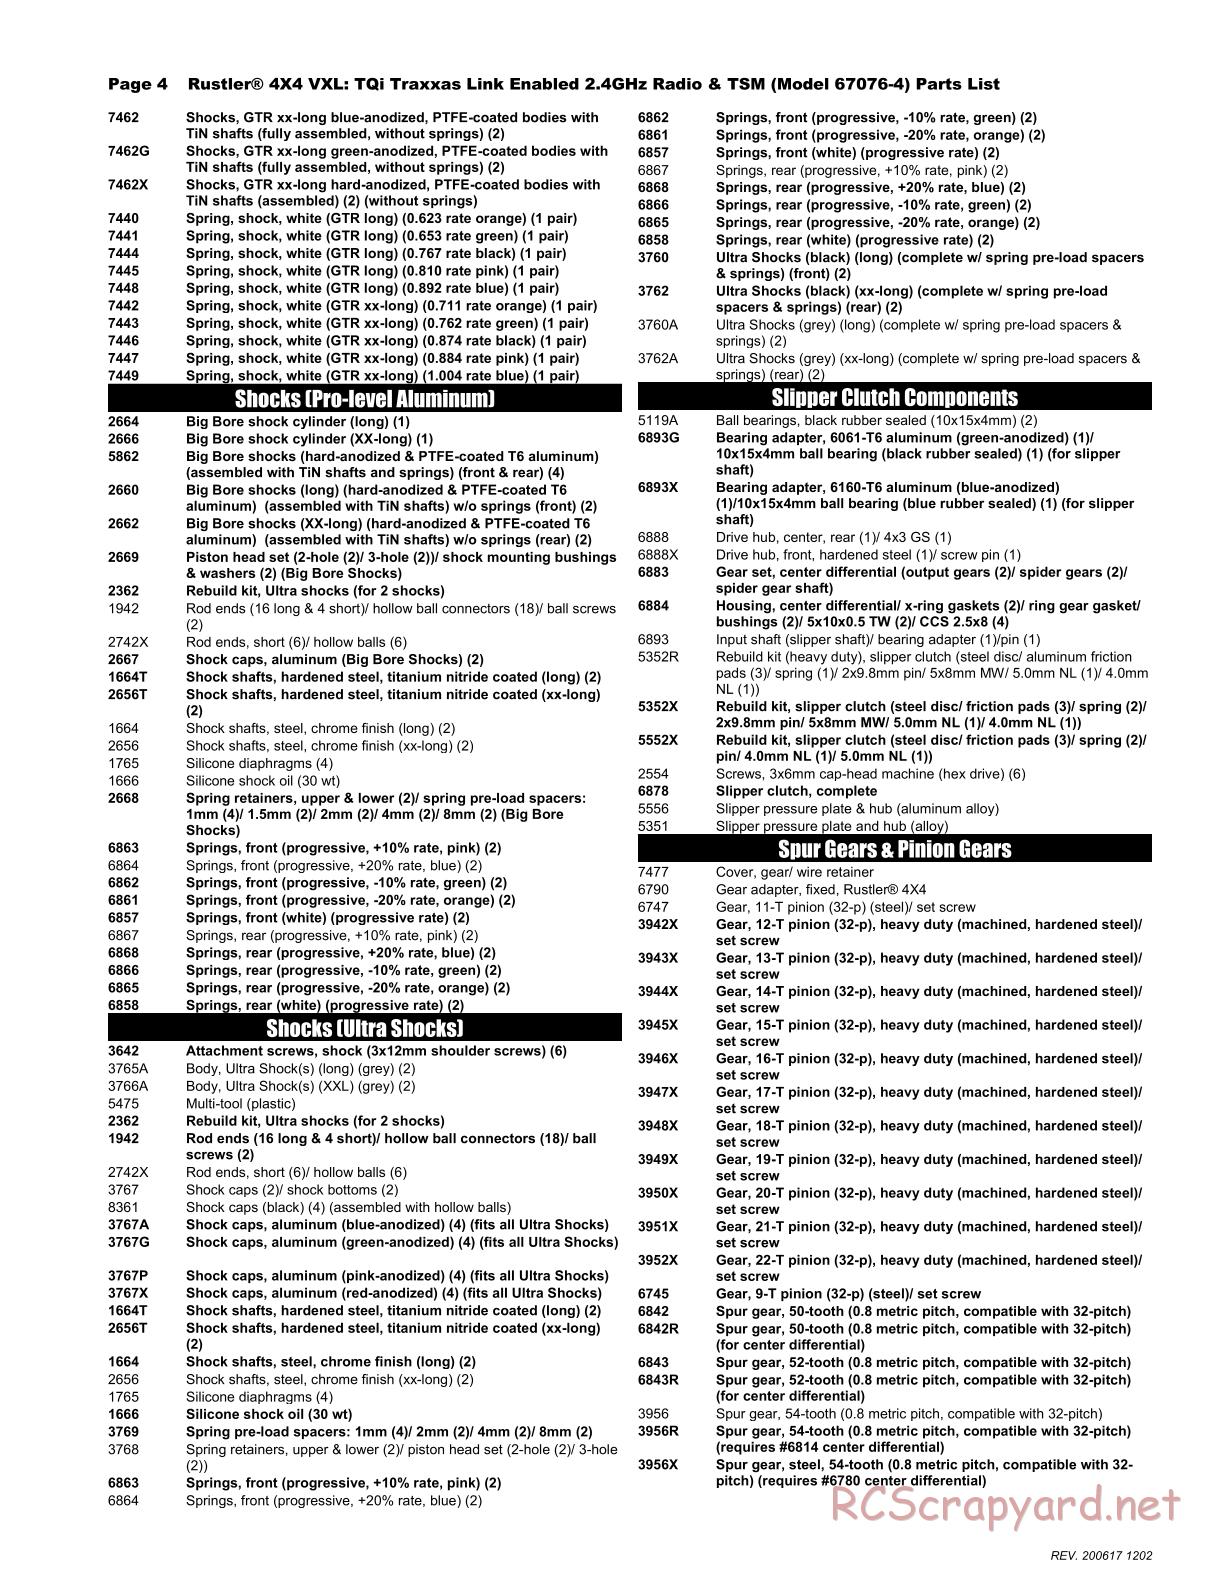 Traxxas - Rustler 4x4 VXL - Parts List - Page 4